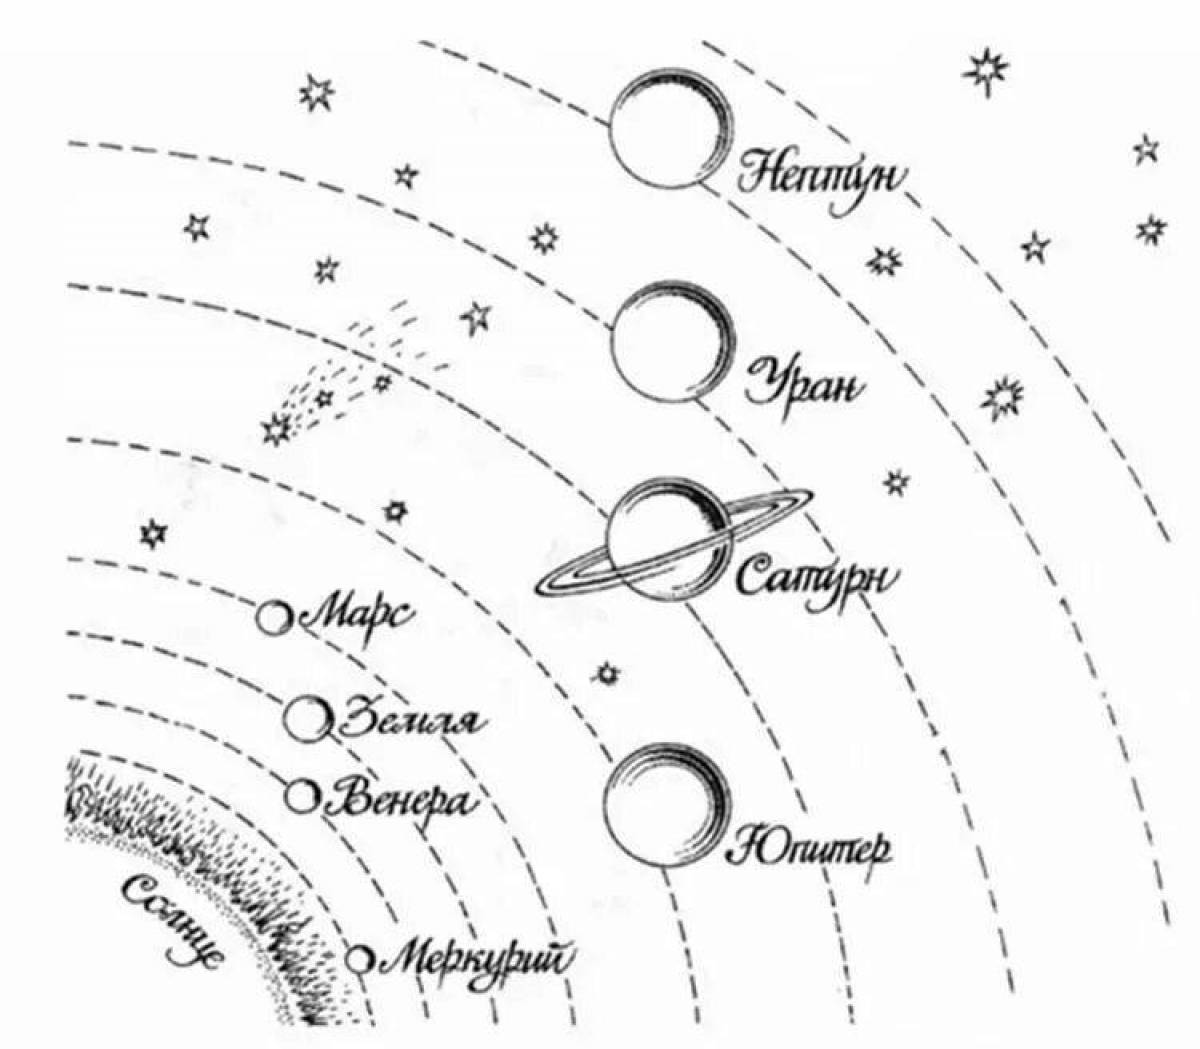 Планеты солнечной системы по порядку от солнца с названиями #3